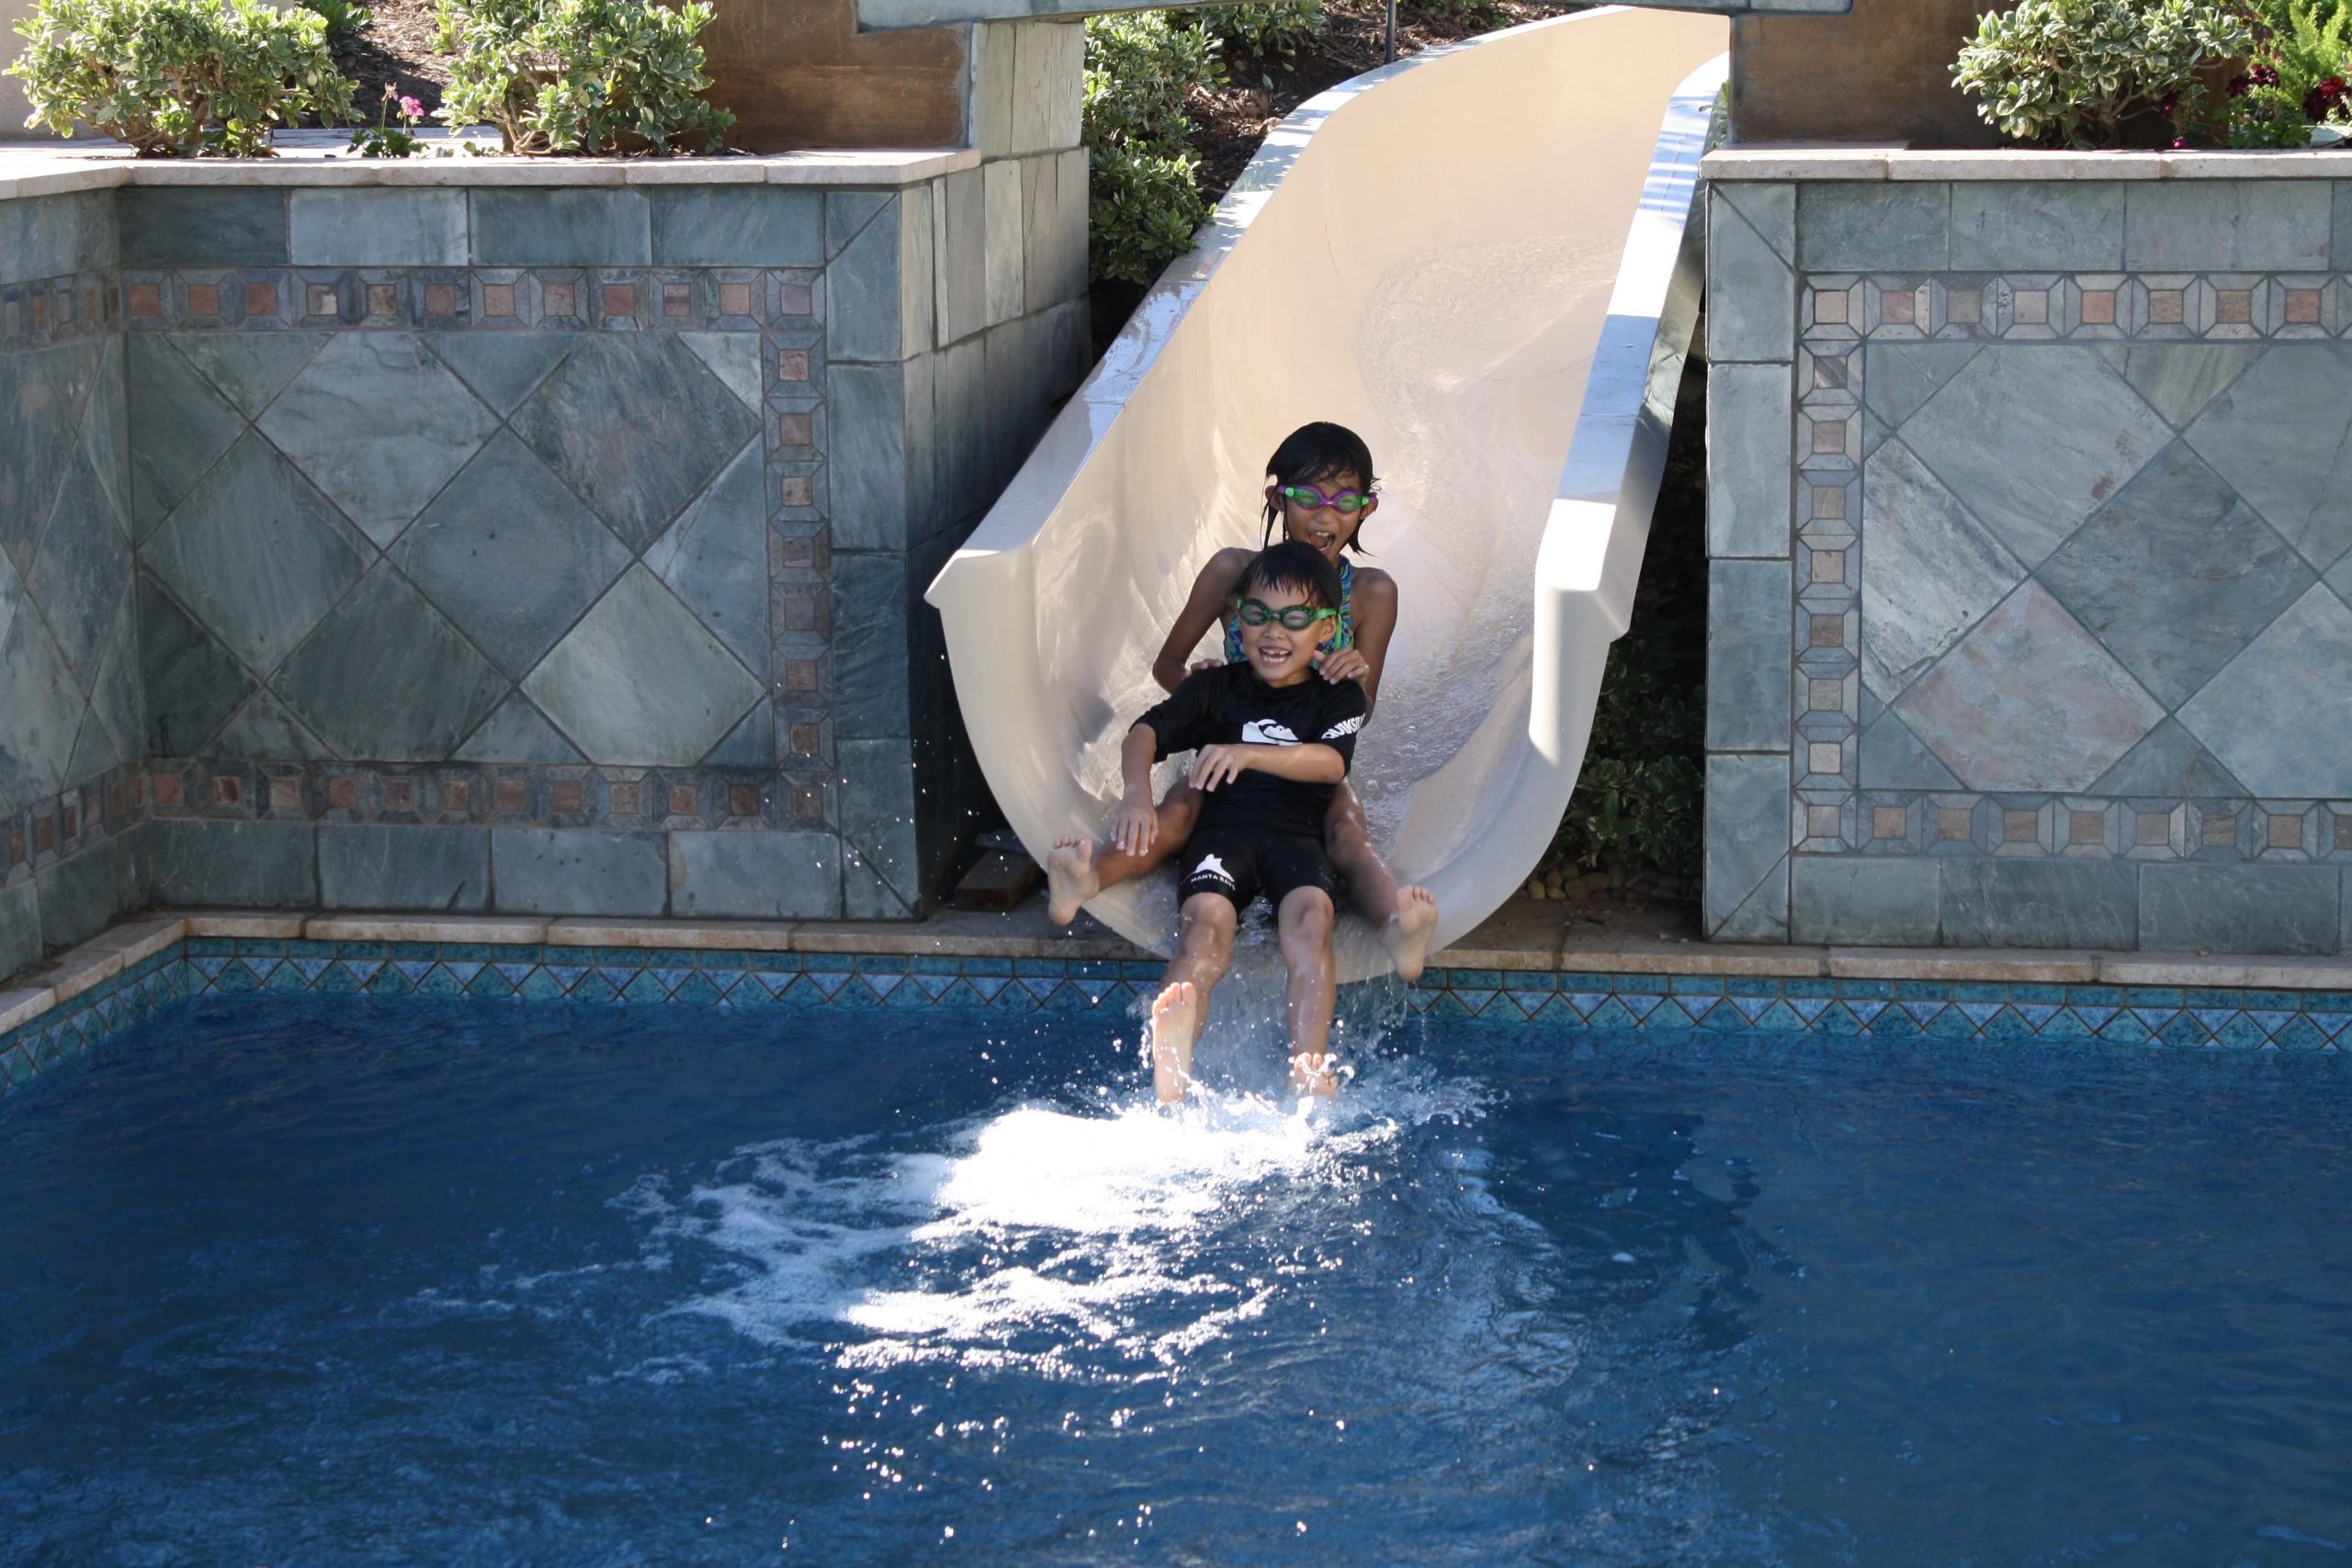 Two young boys enjoy sliding into the grandparents backyard pool